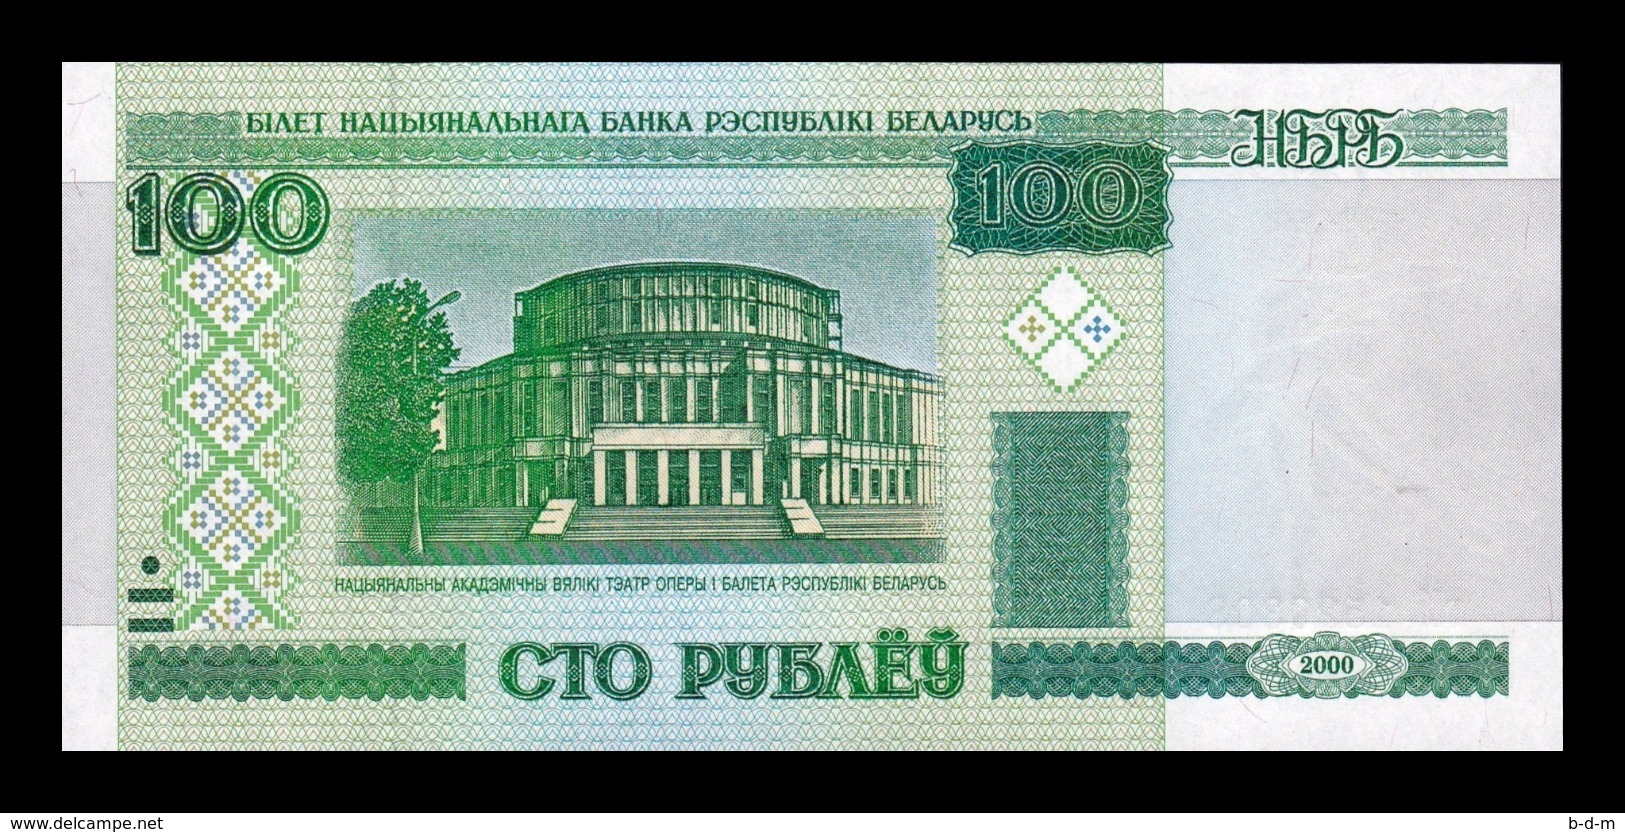 Bielorrusia Belarus Lot Bundle 10 Banknotes 100 Rublos 2000 Pick 26a With Security Thread SC UNC - Belarus